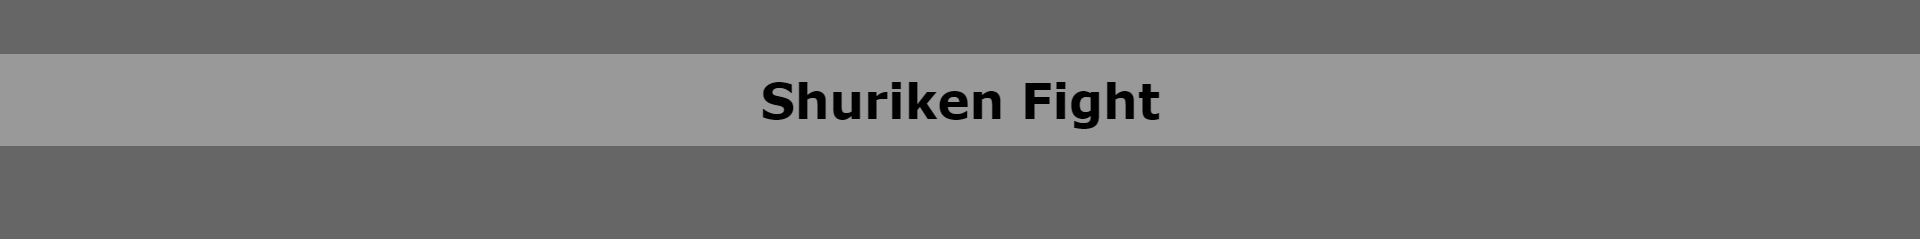 Shuriken Fight